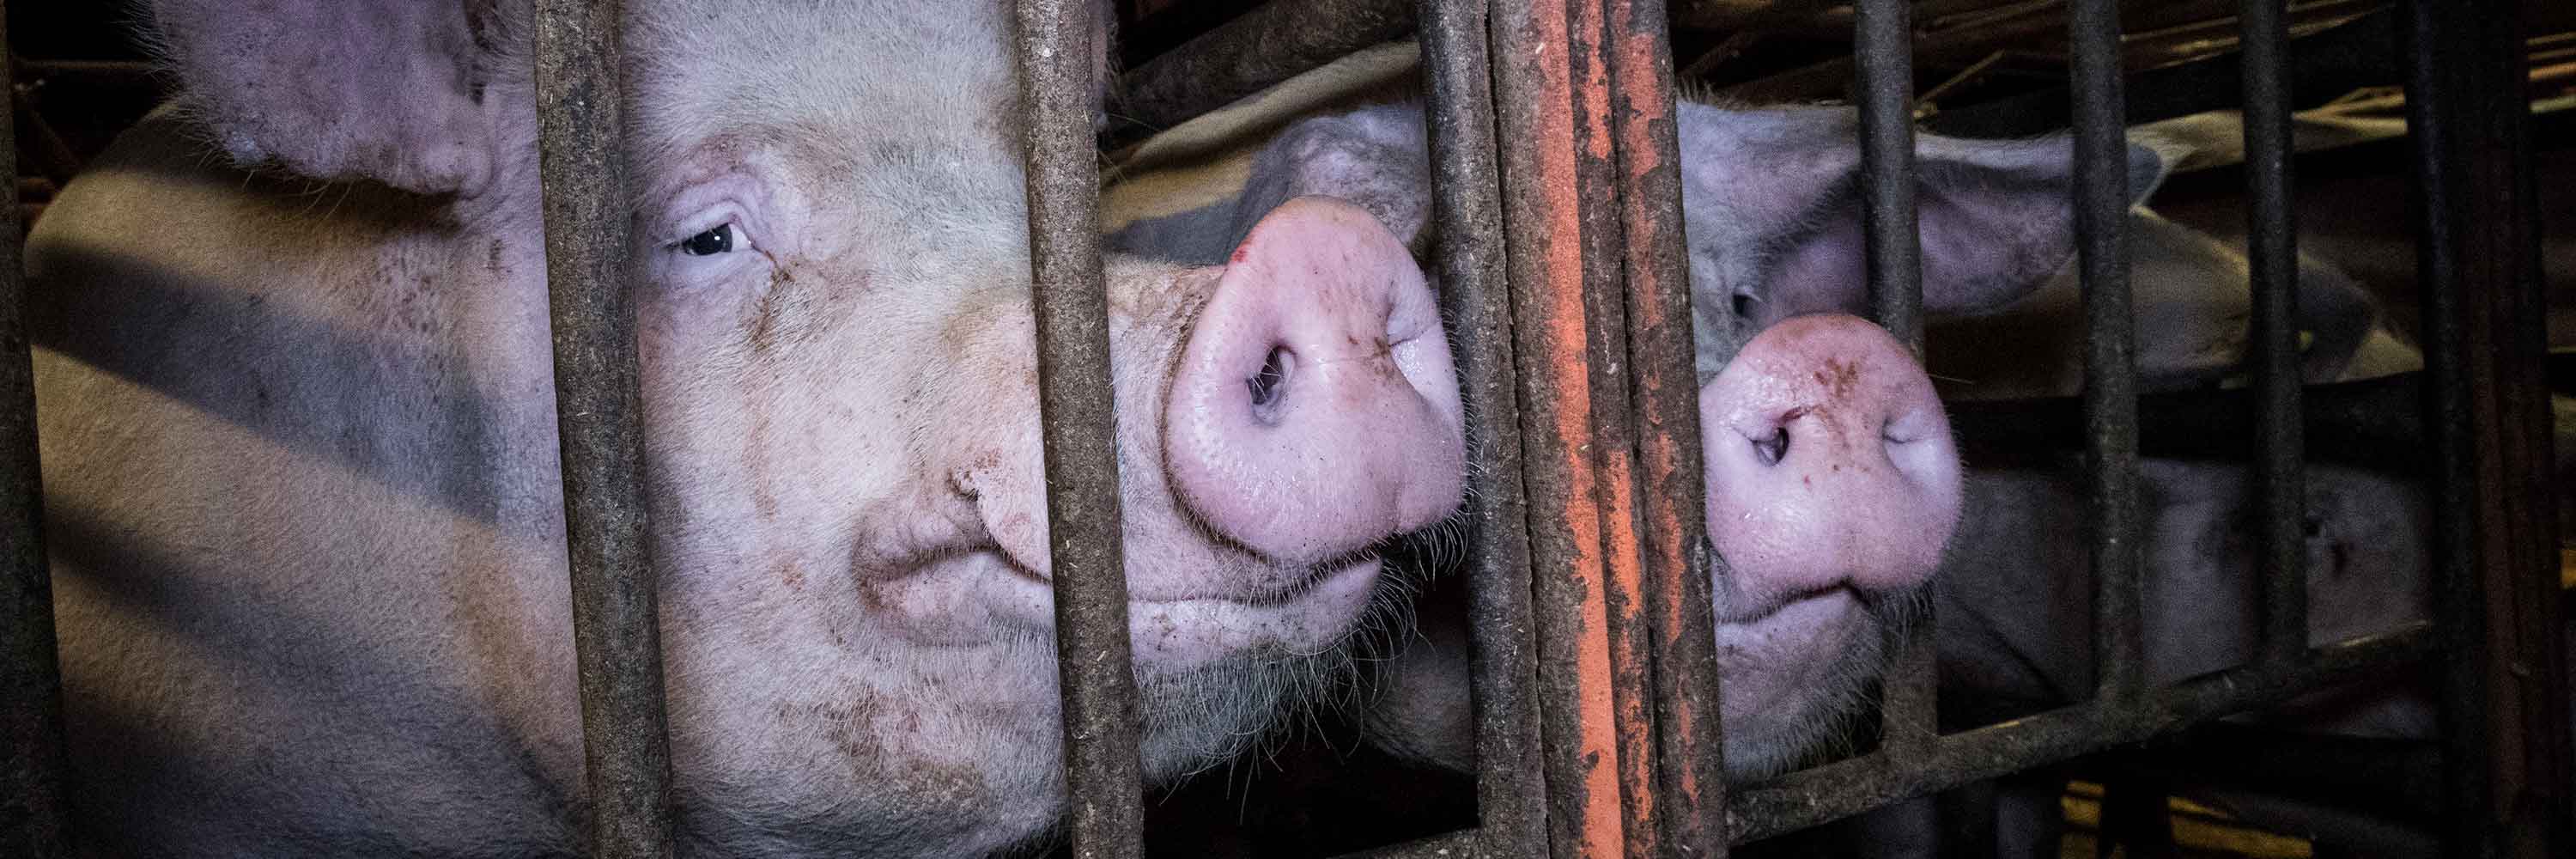 Pigs in gestation crate